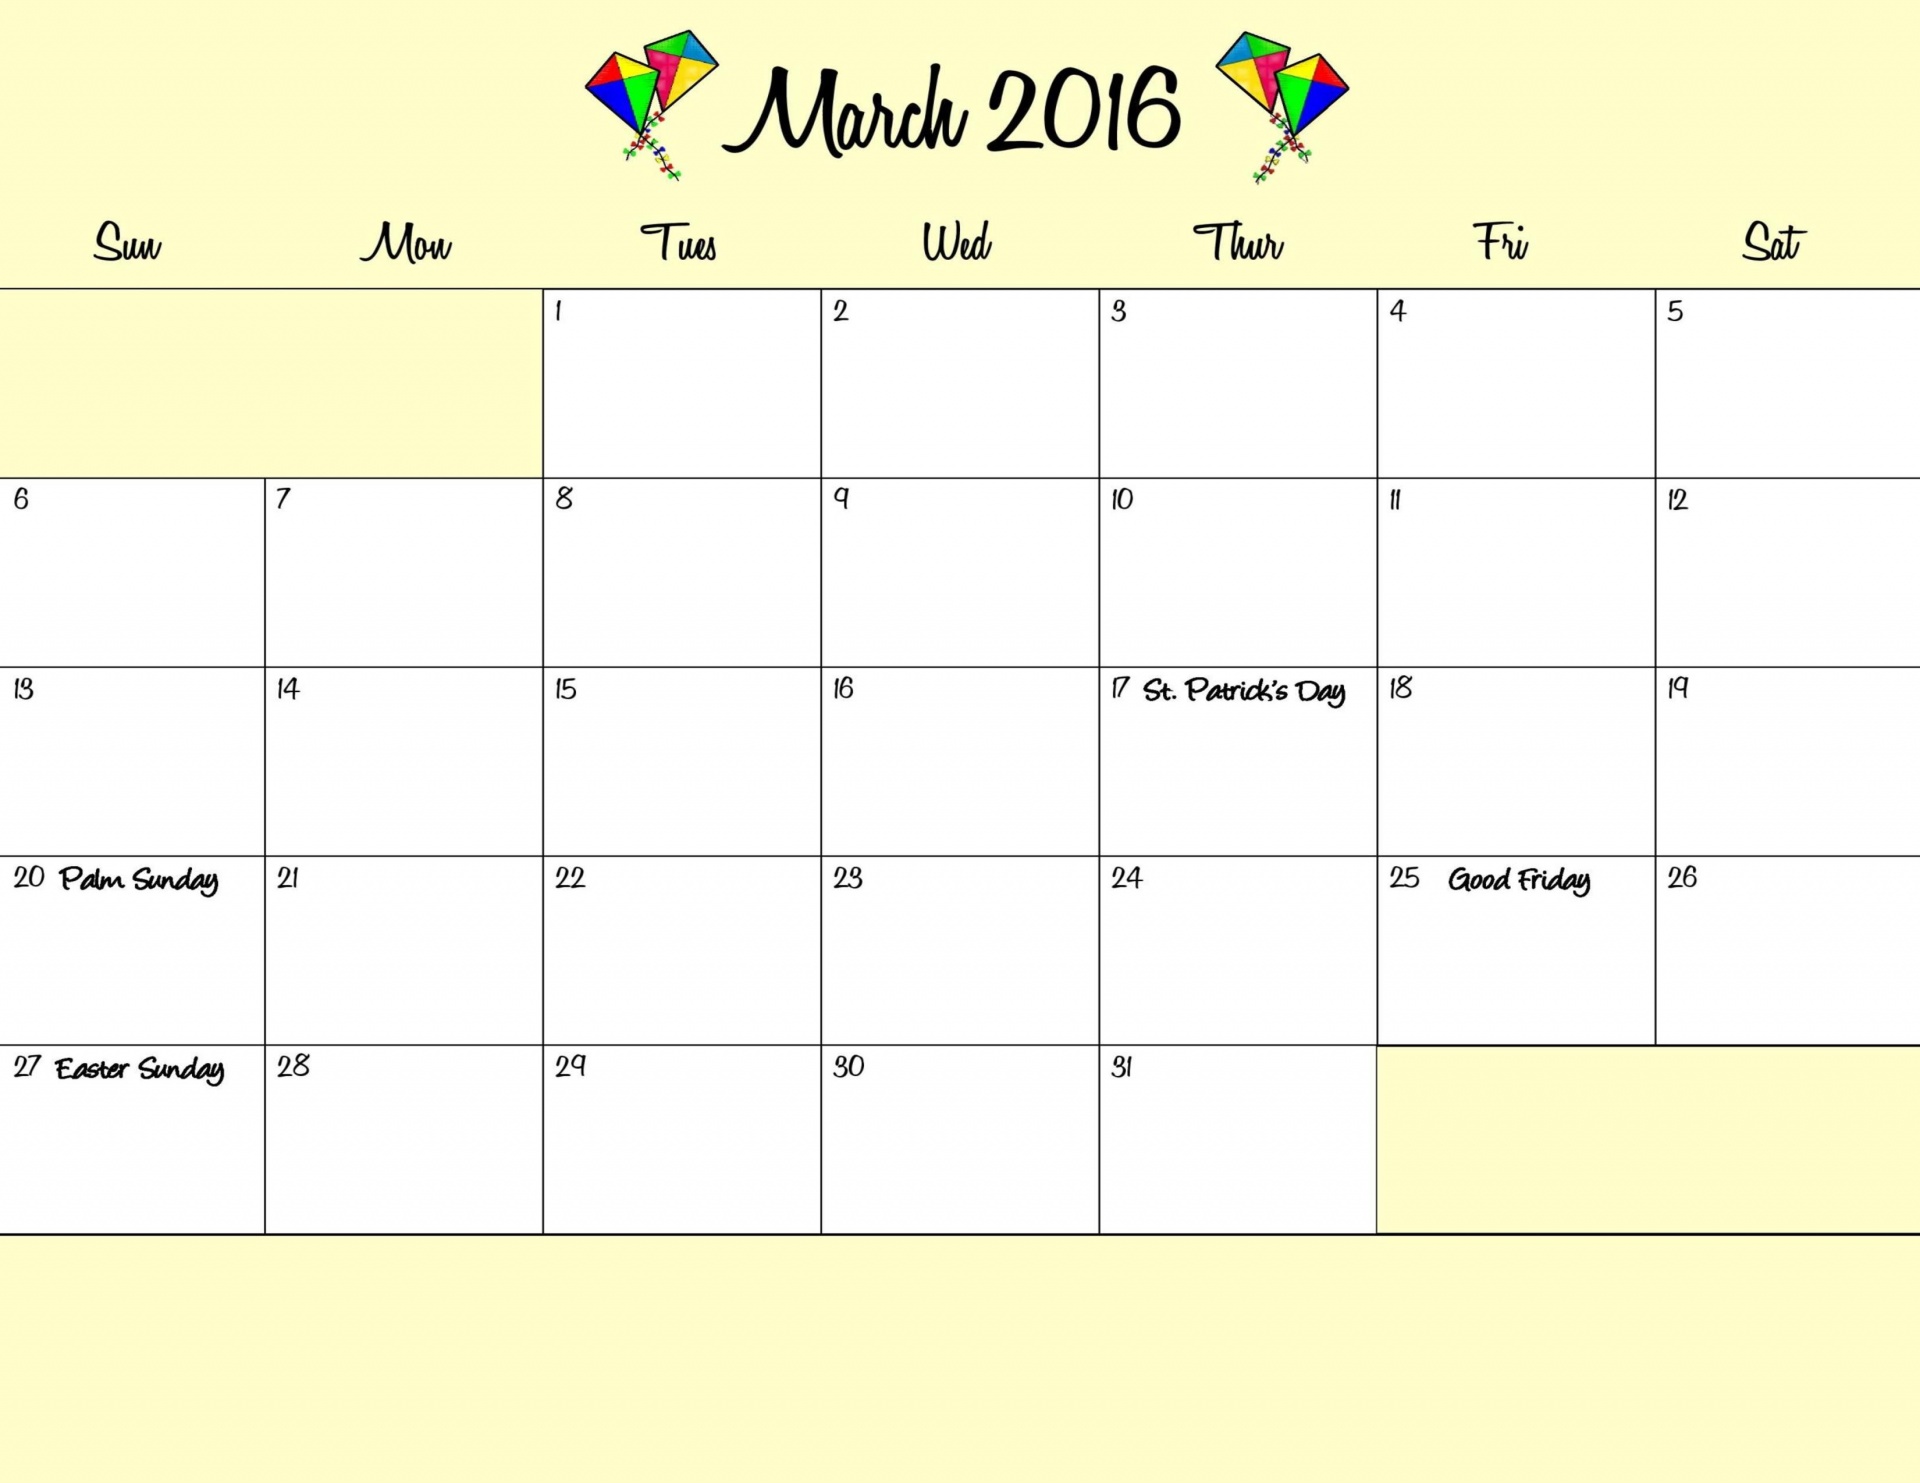 Março 2016 Planner